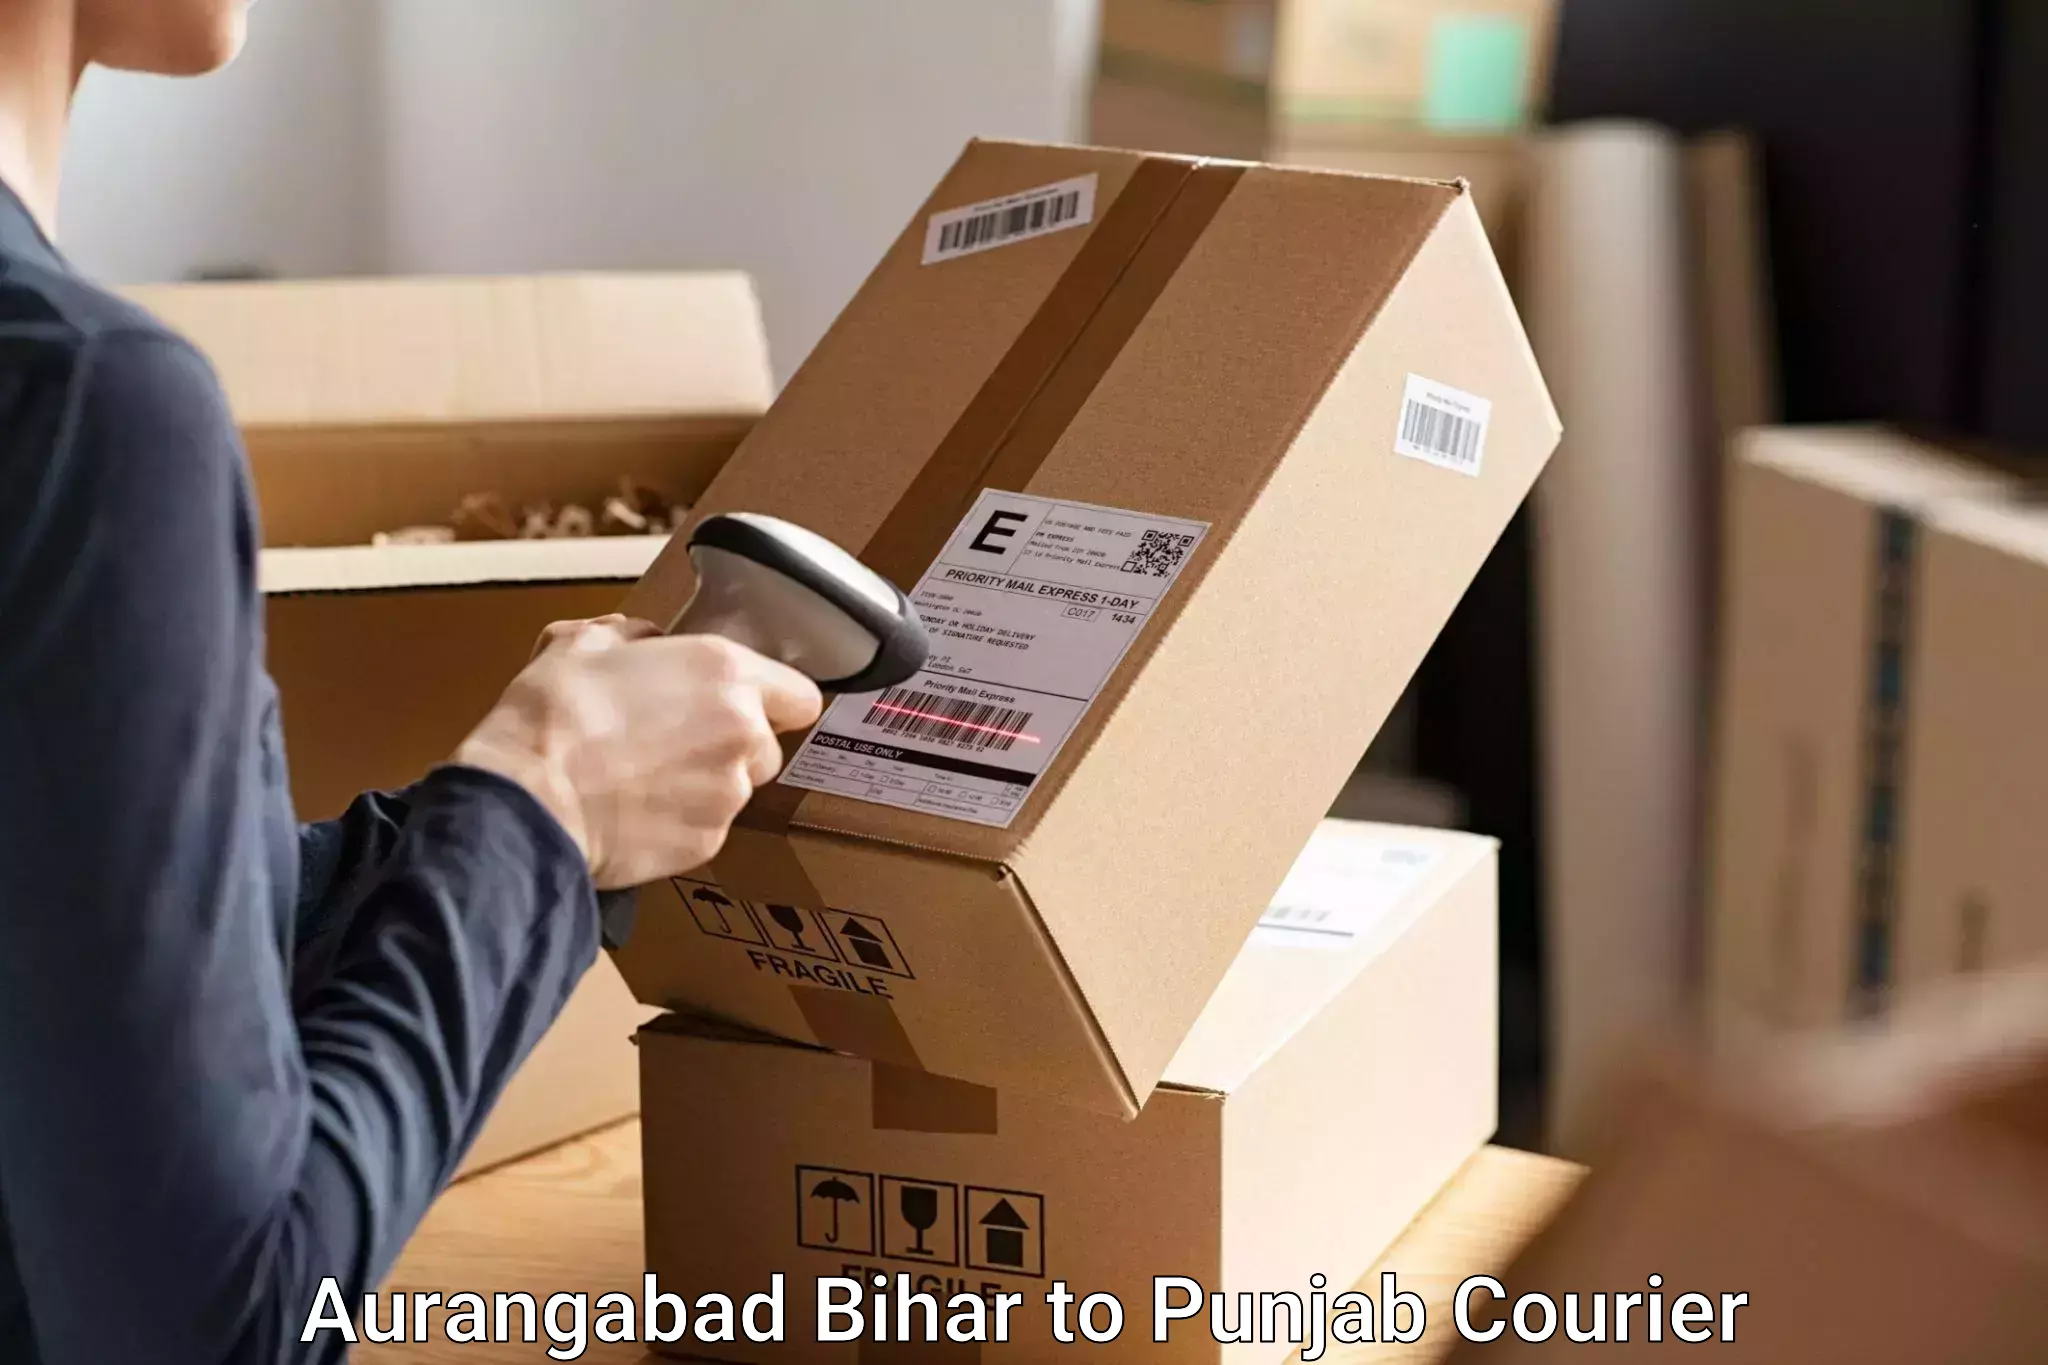 Baggage transport professionals Aurangabad Bihar to Ajnala